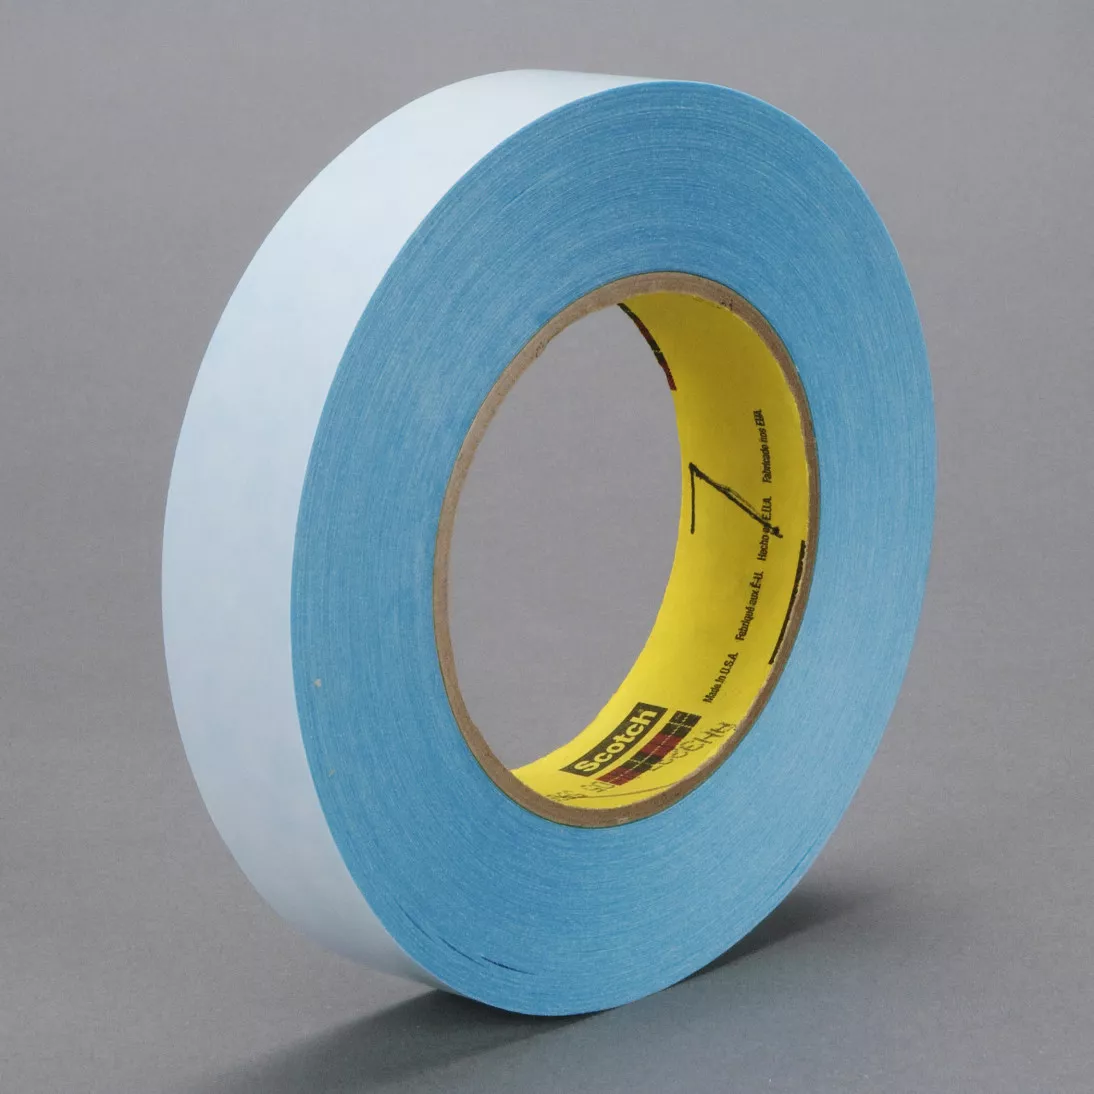 3M™ Repulpable Double Coated Tape R3227, Blue, 24 mm x 55 m, 3.5 mil, 36
rolls per case